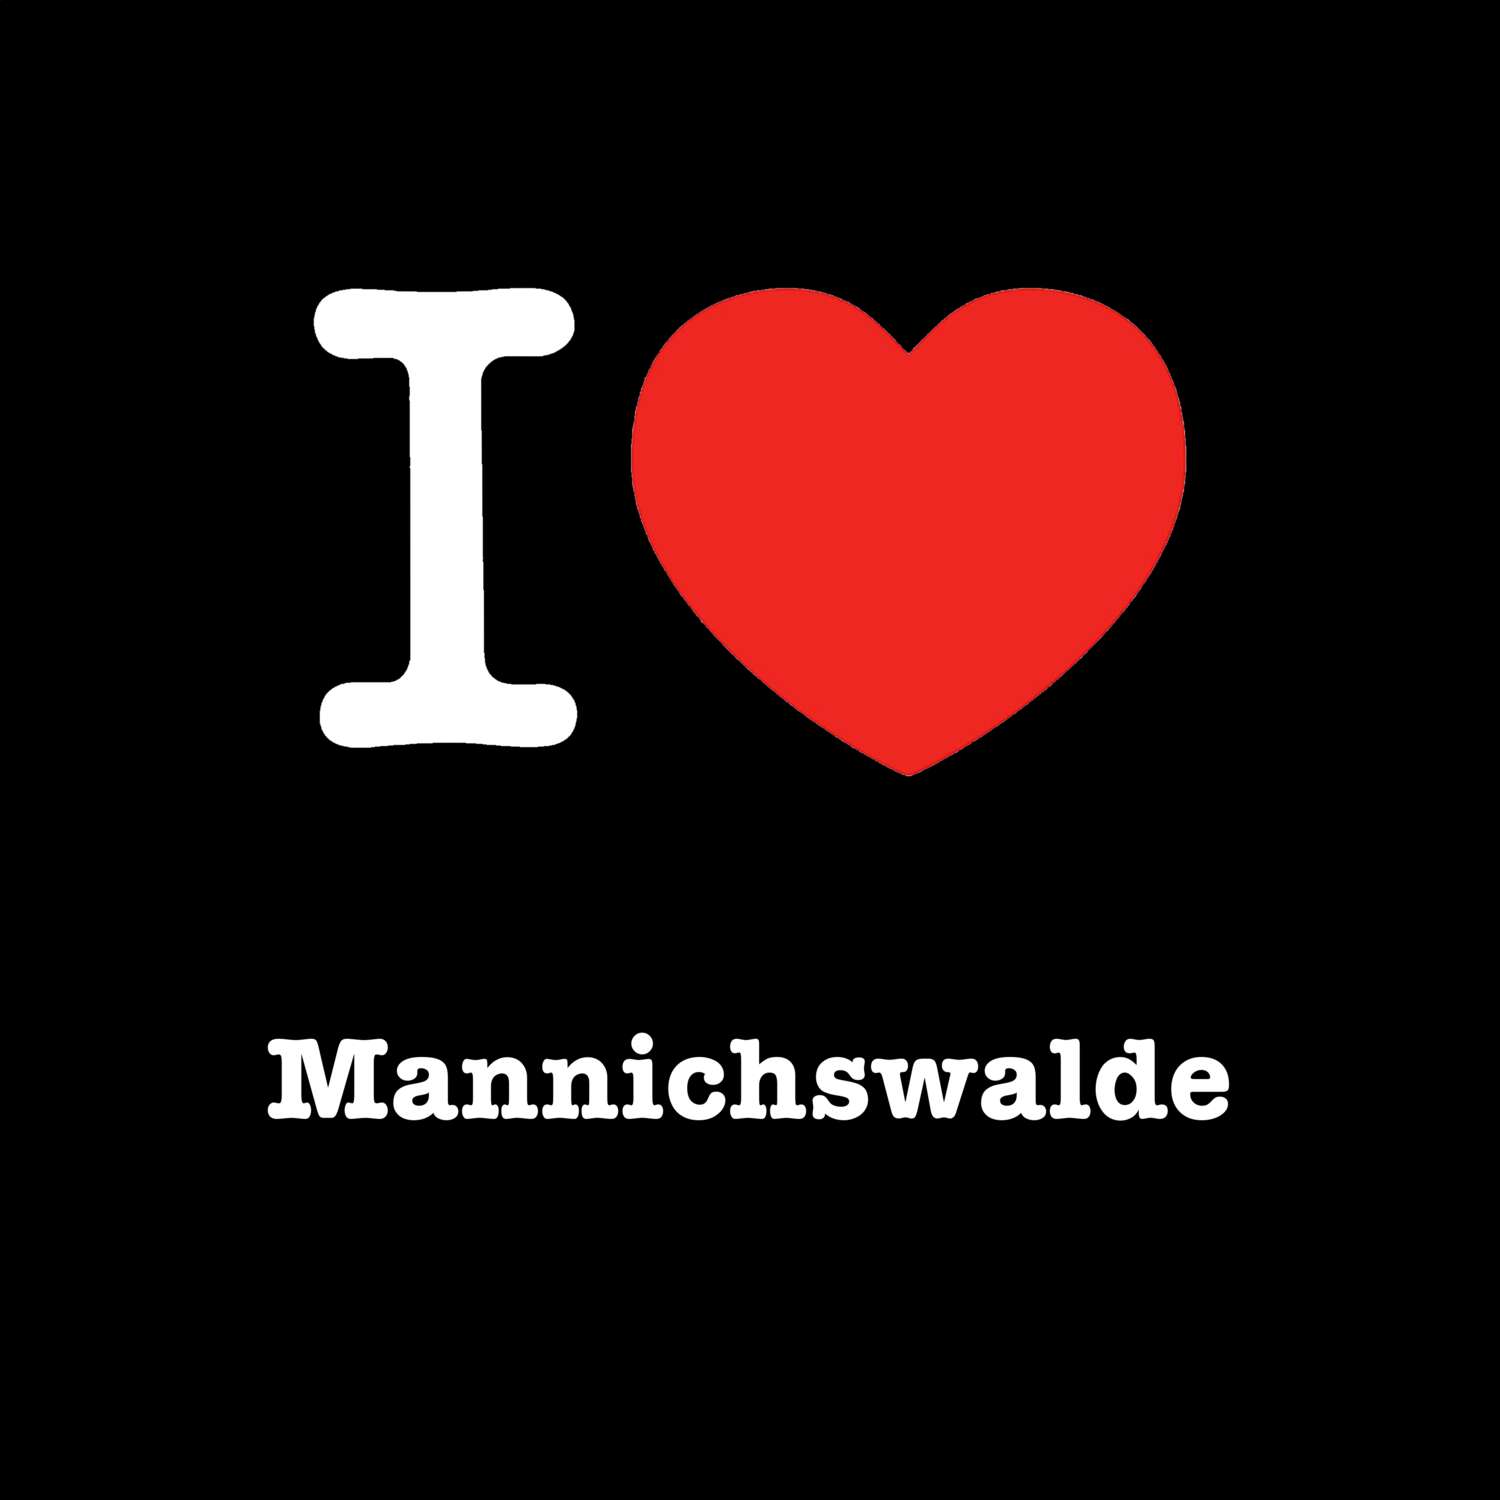 Mannichswalde T-Shirt »I love«